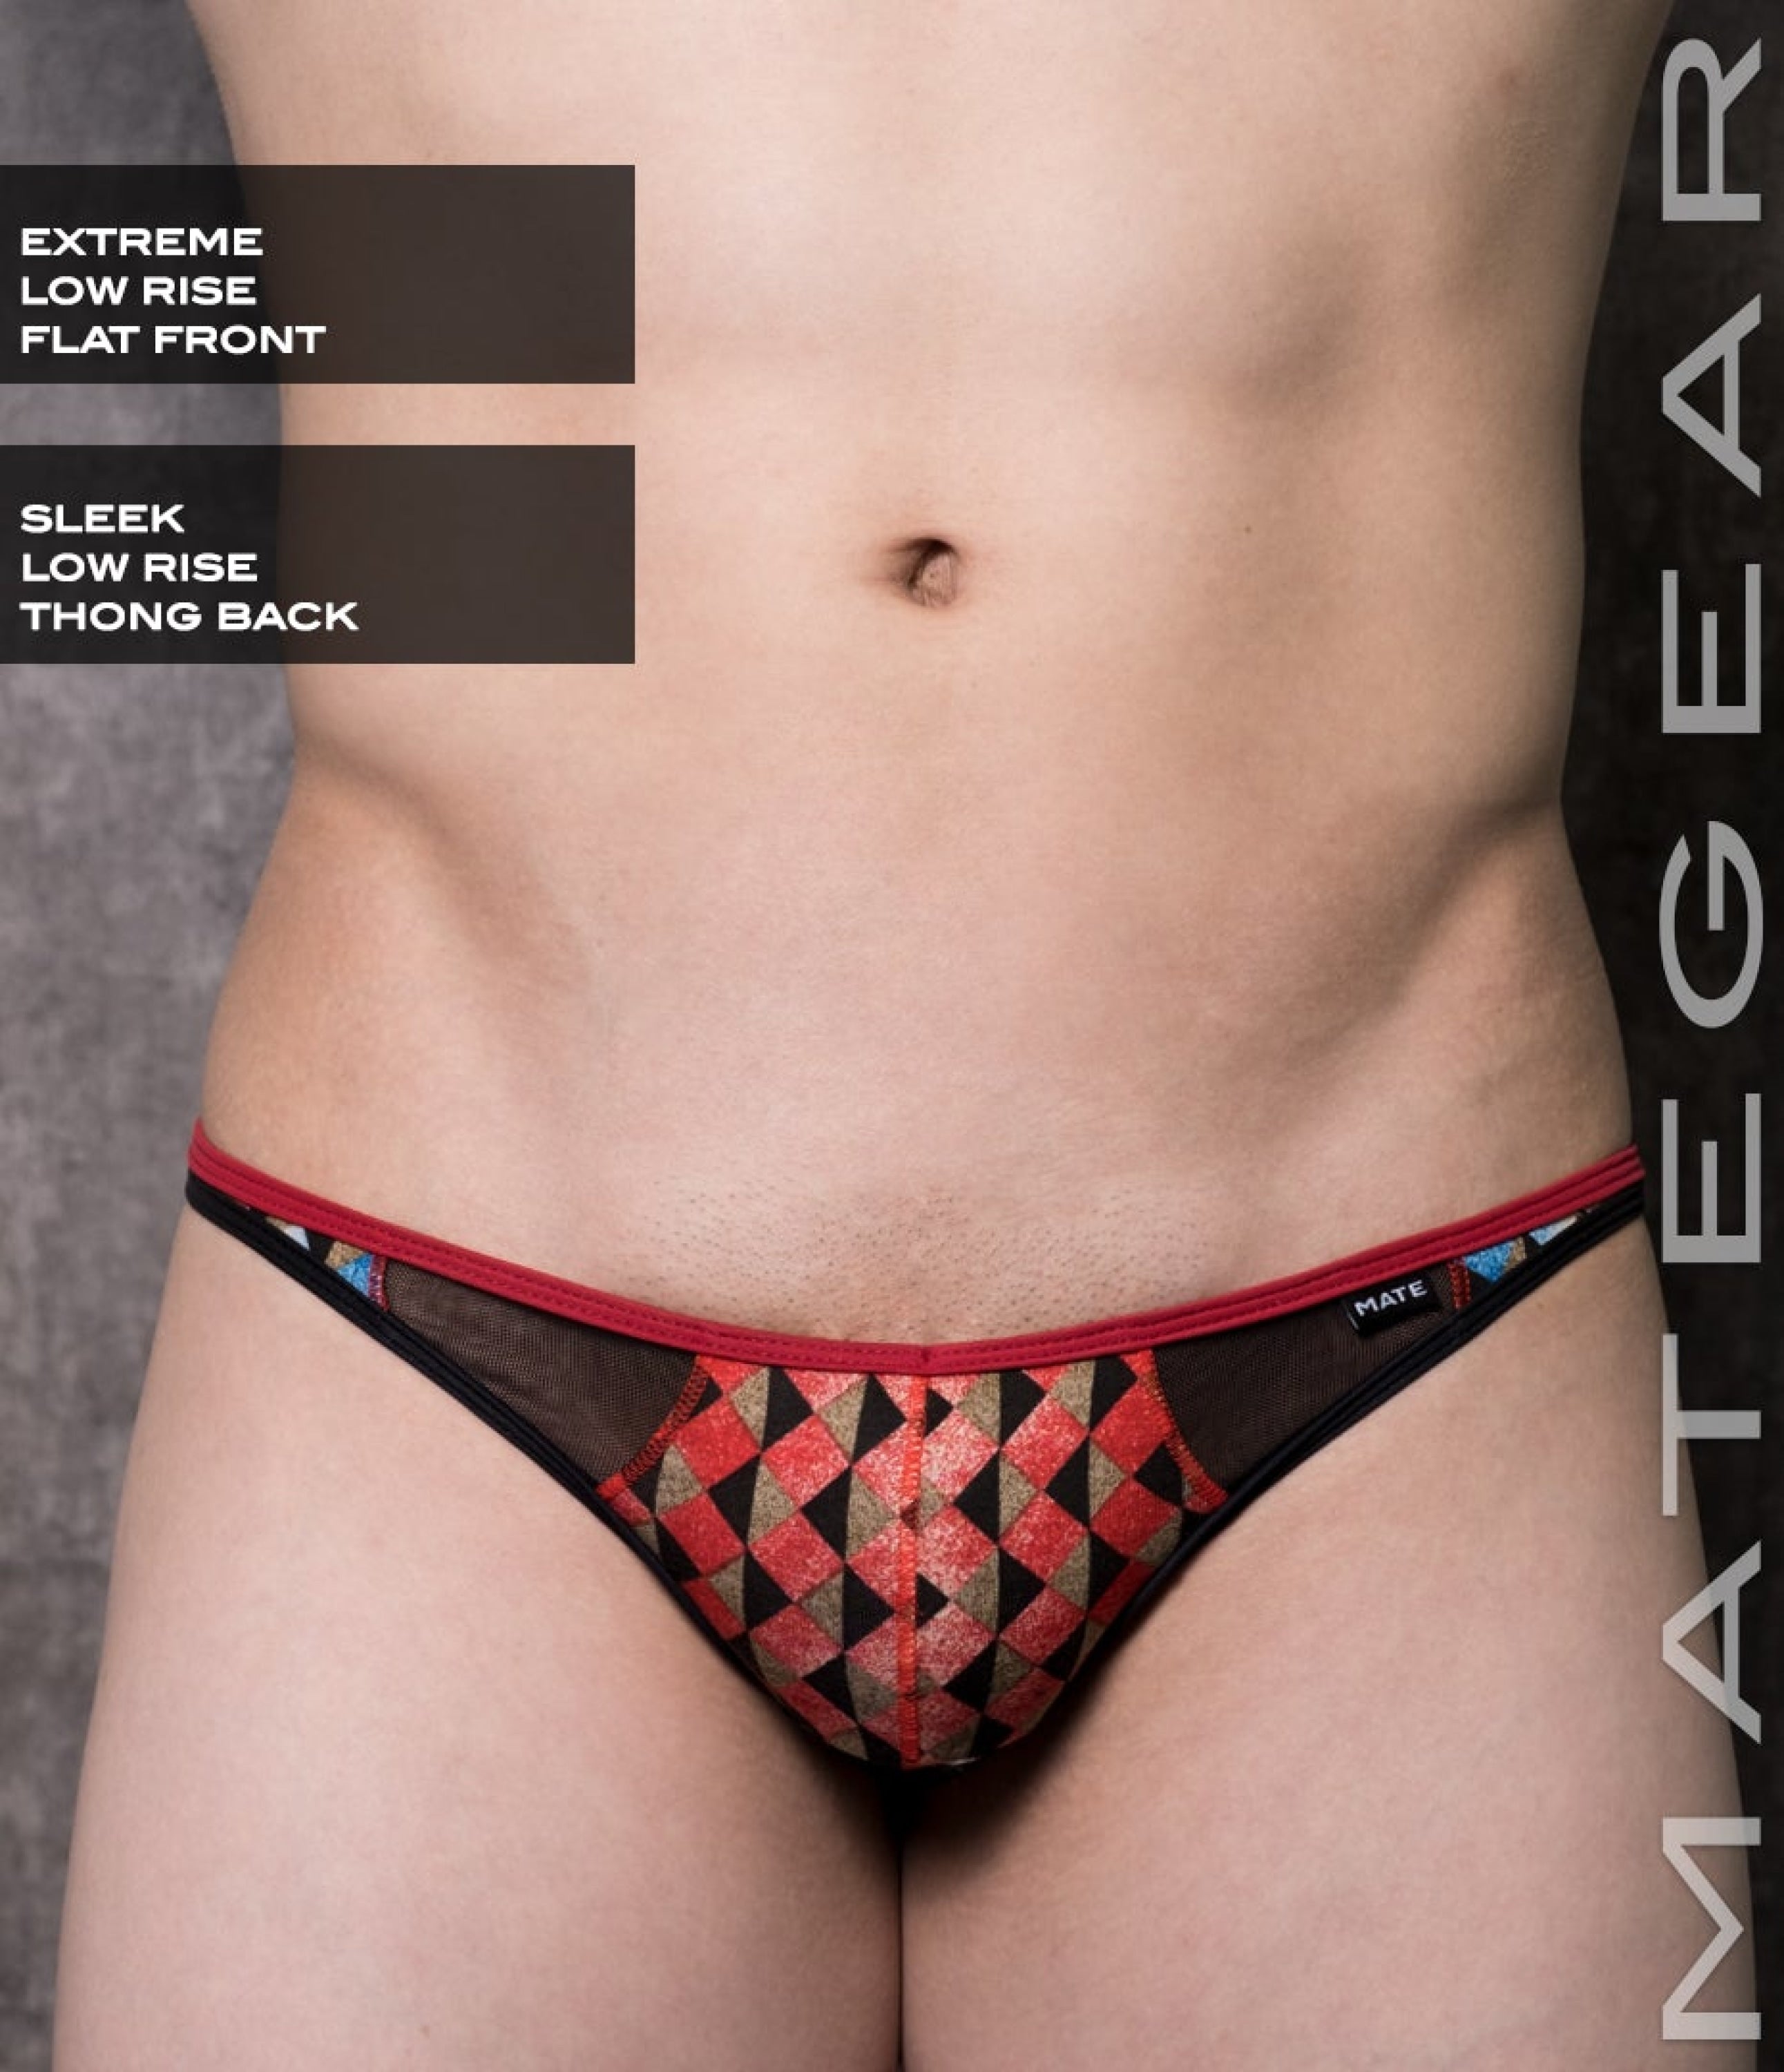 Sexy Mens Underwear Extremely Mini Thong - Sa Hyun (Flat Front) Red Black Diamond Print / Medium